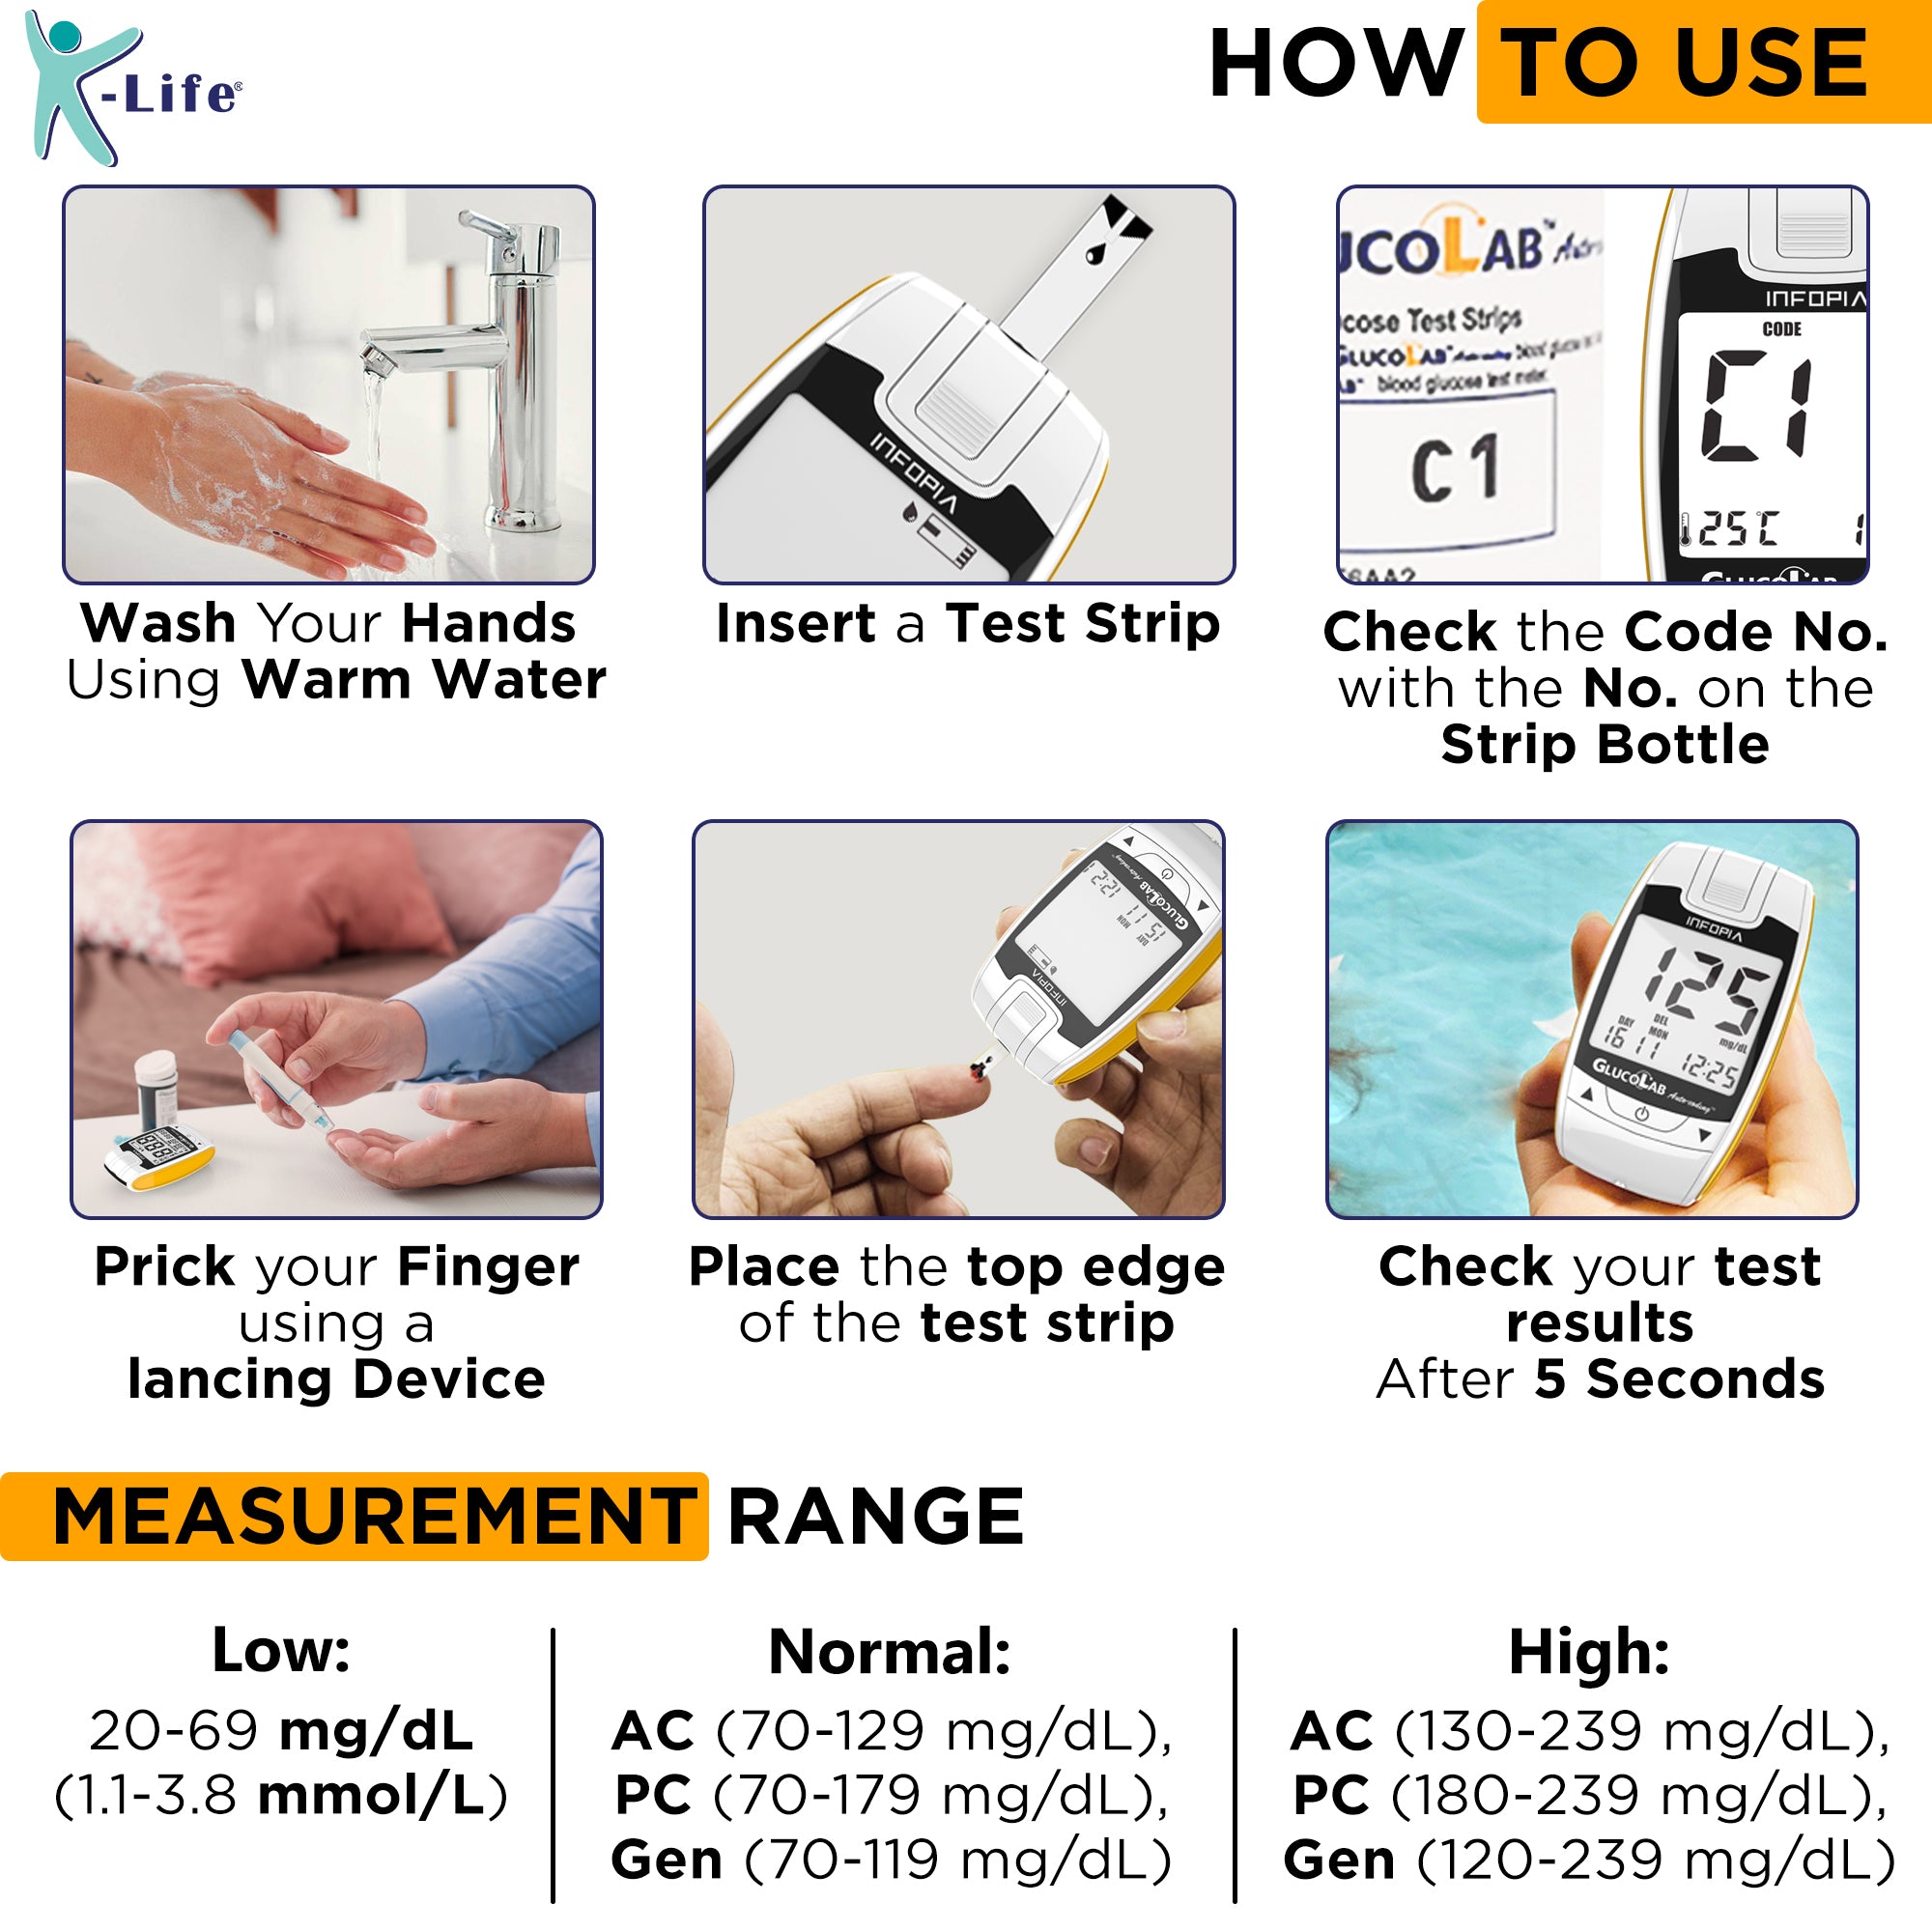 K-life Glucolab Fully Automatic Blood Glucose Check Sugar Testing Machine 50 Strips Glucometer  (White)